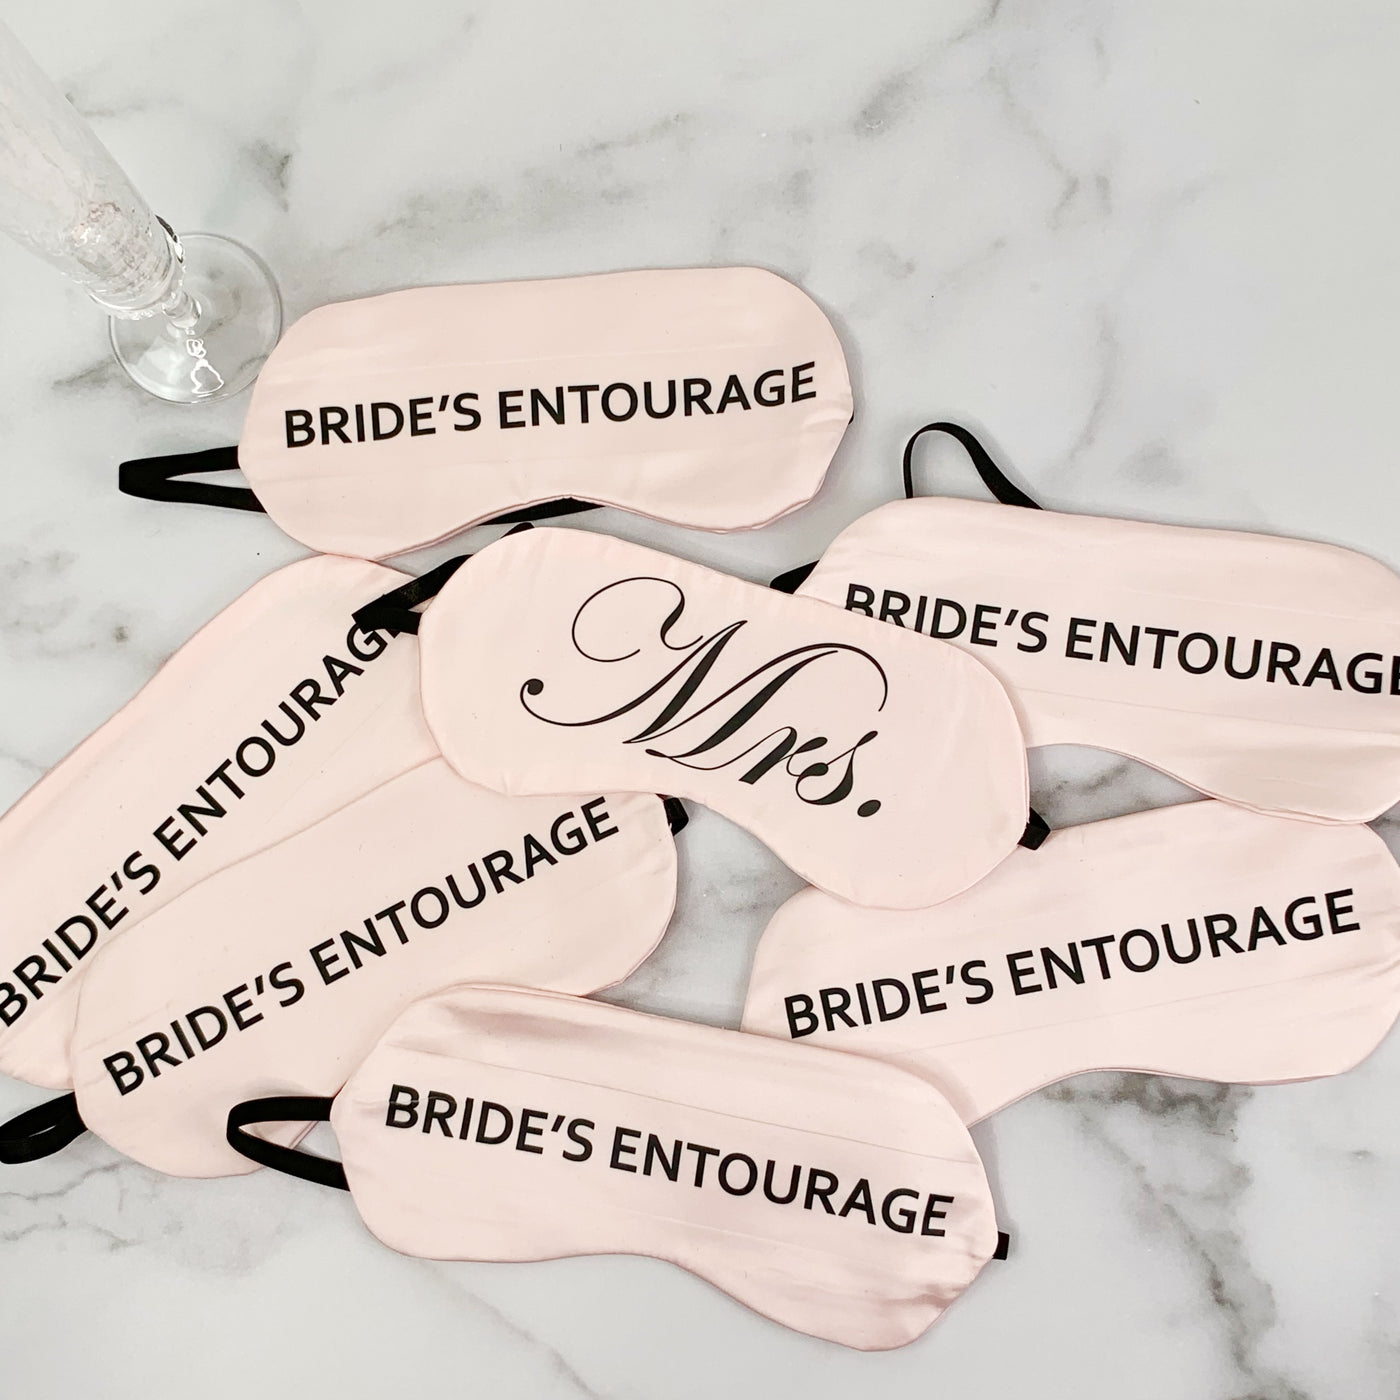 Bride's Entourage Sleep Mask by Toss Designs